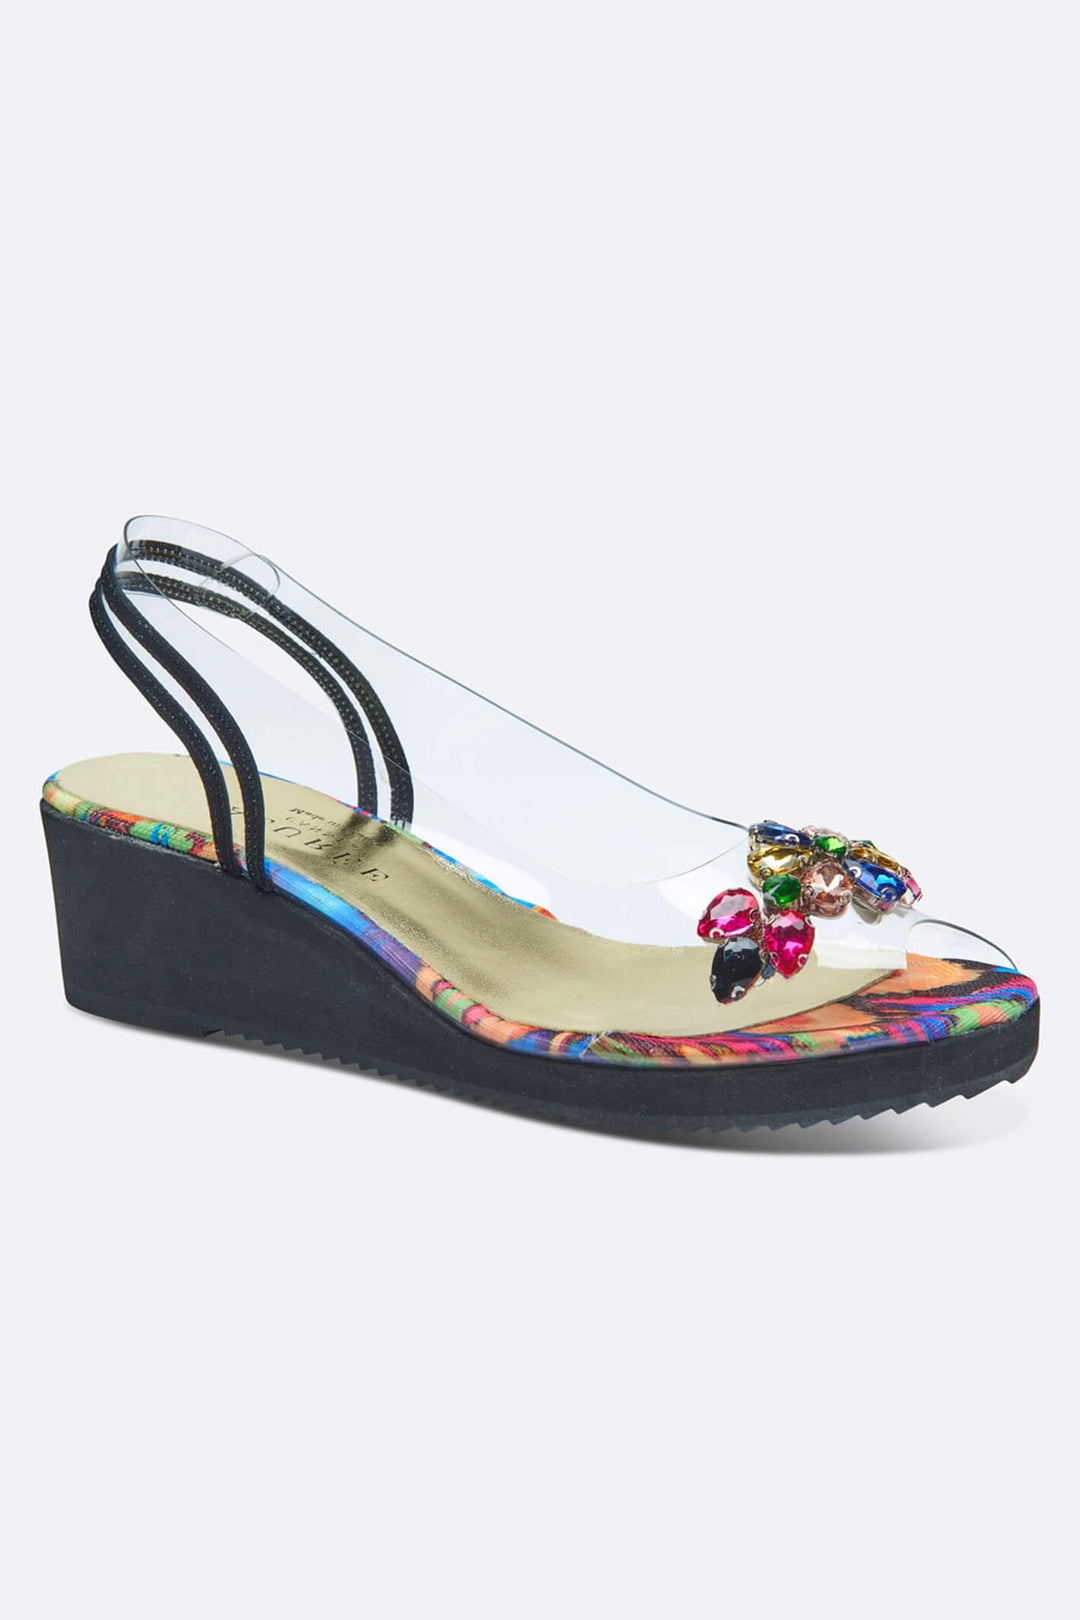 Azuree Marcel Micro 8B Shiva Gel Black Multicolour Wedge Shoes - Experience Boutique